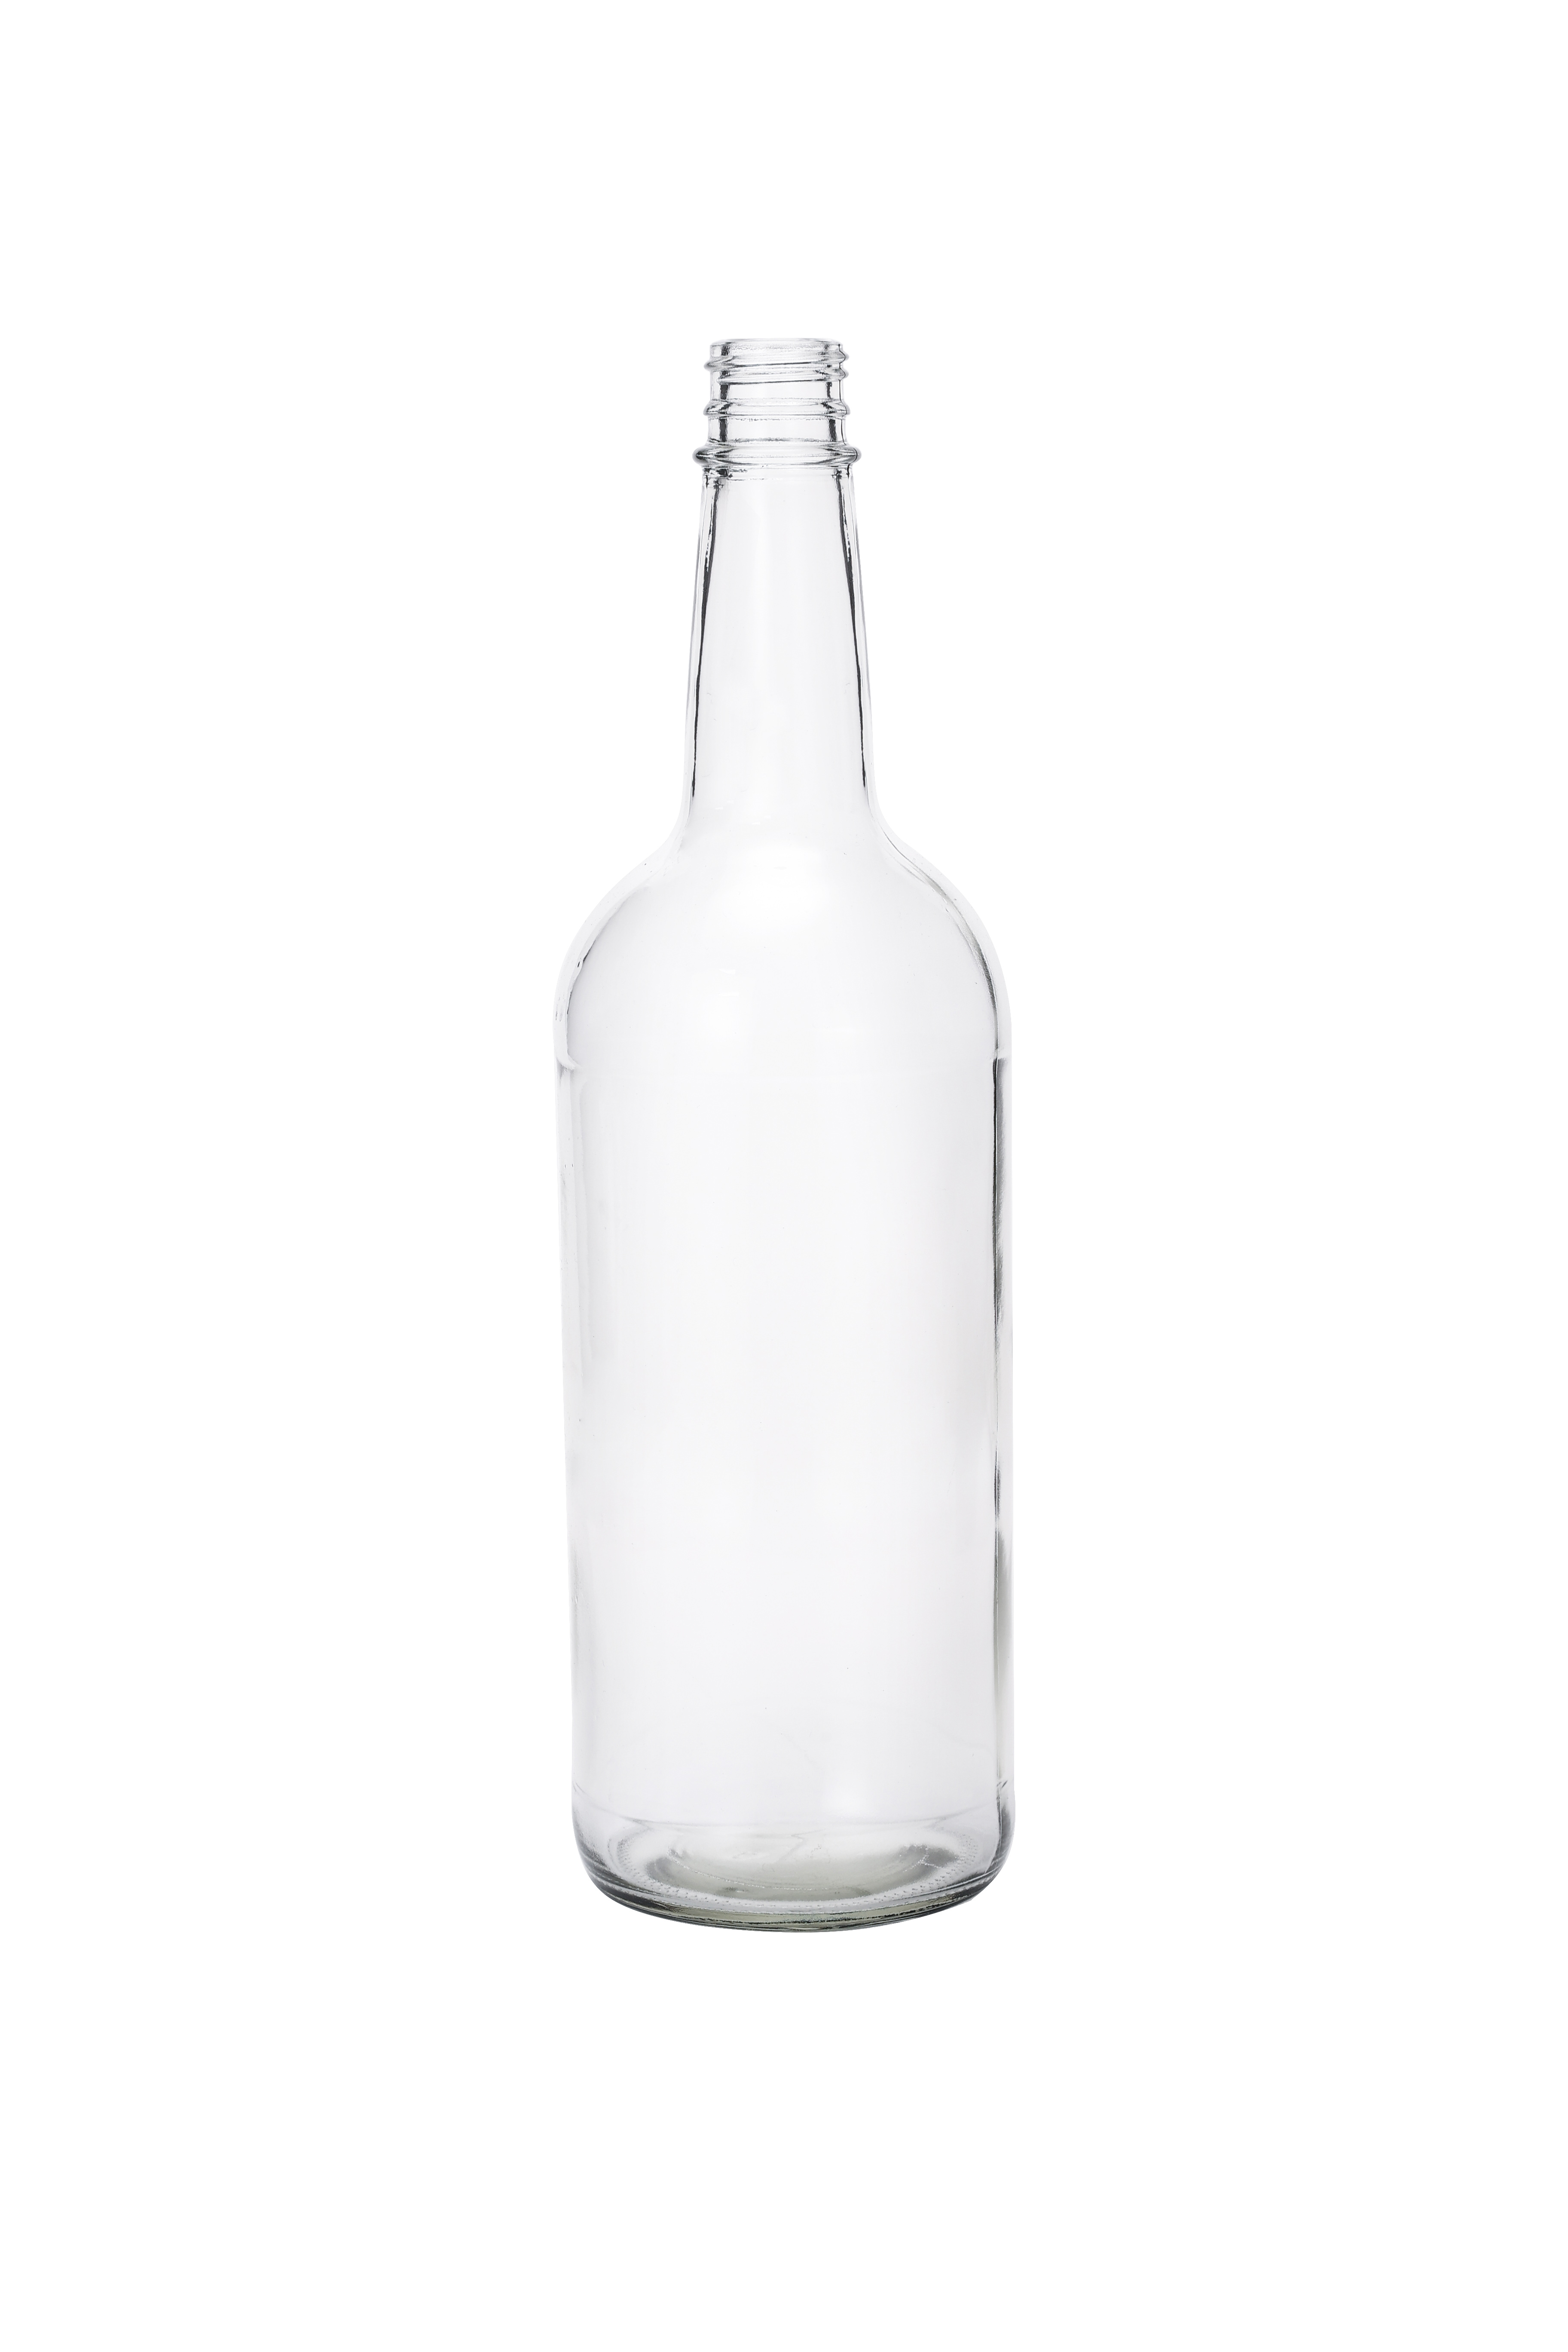 700ml 750ml Empty Glass Vodka Liquor Glass Bottles